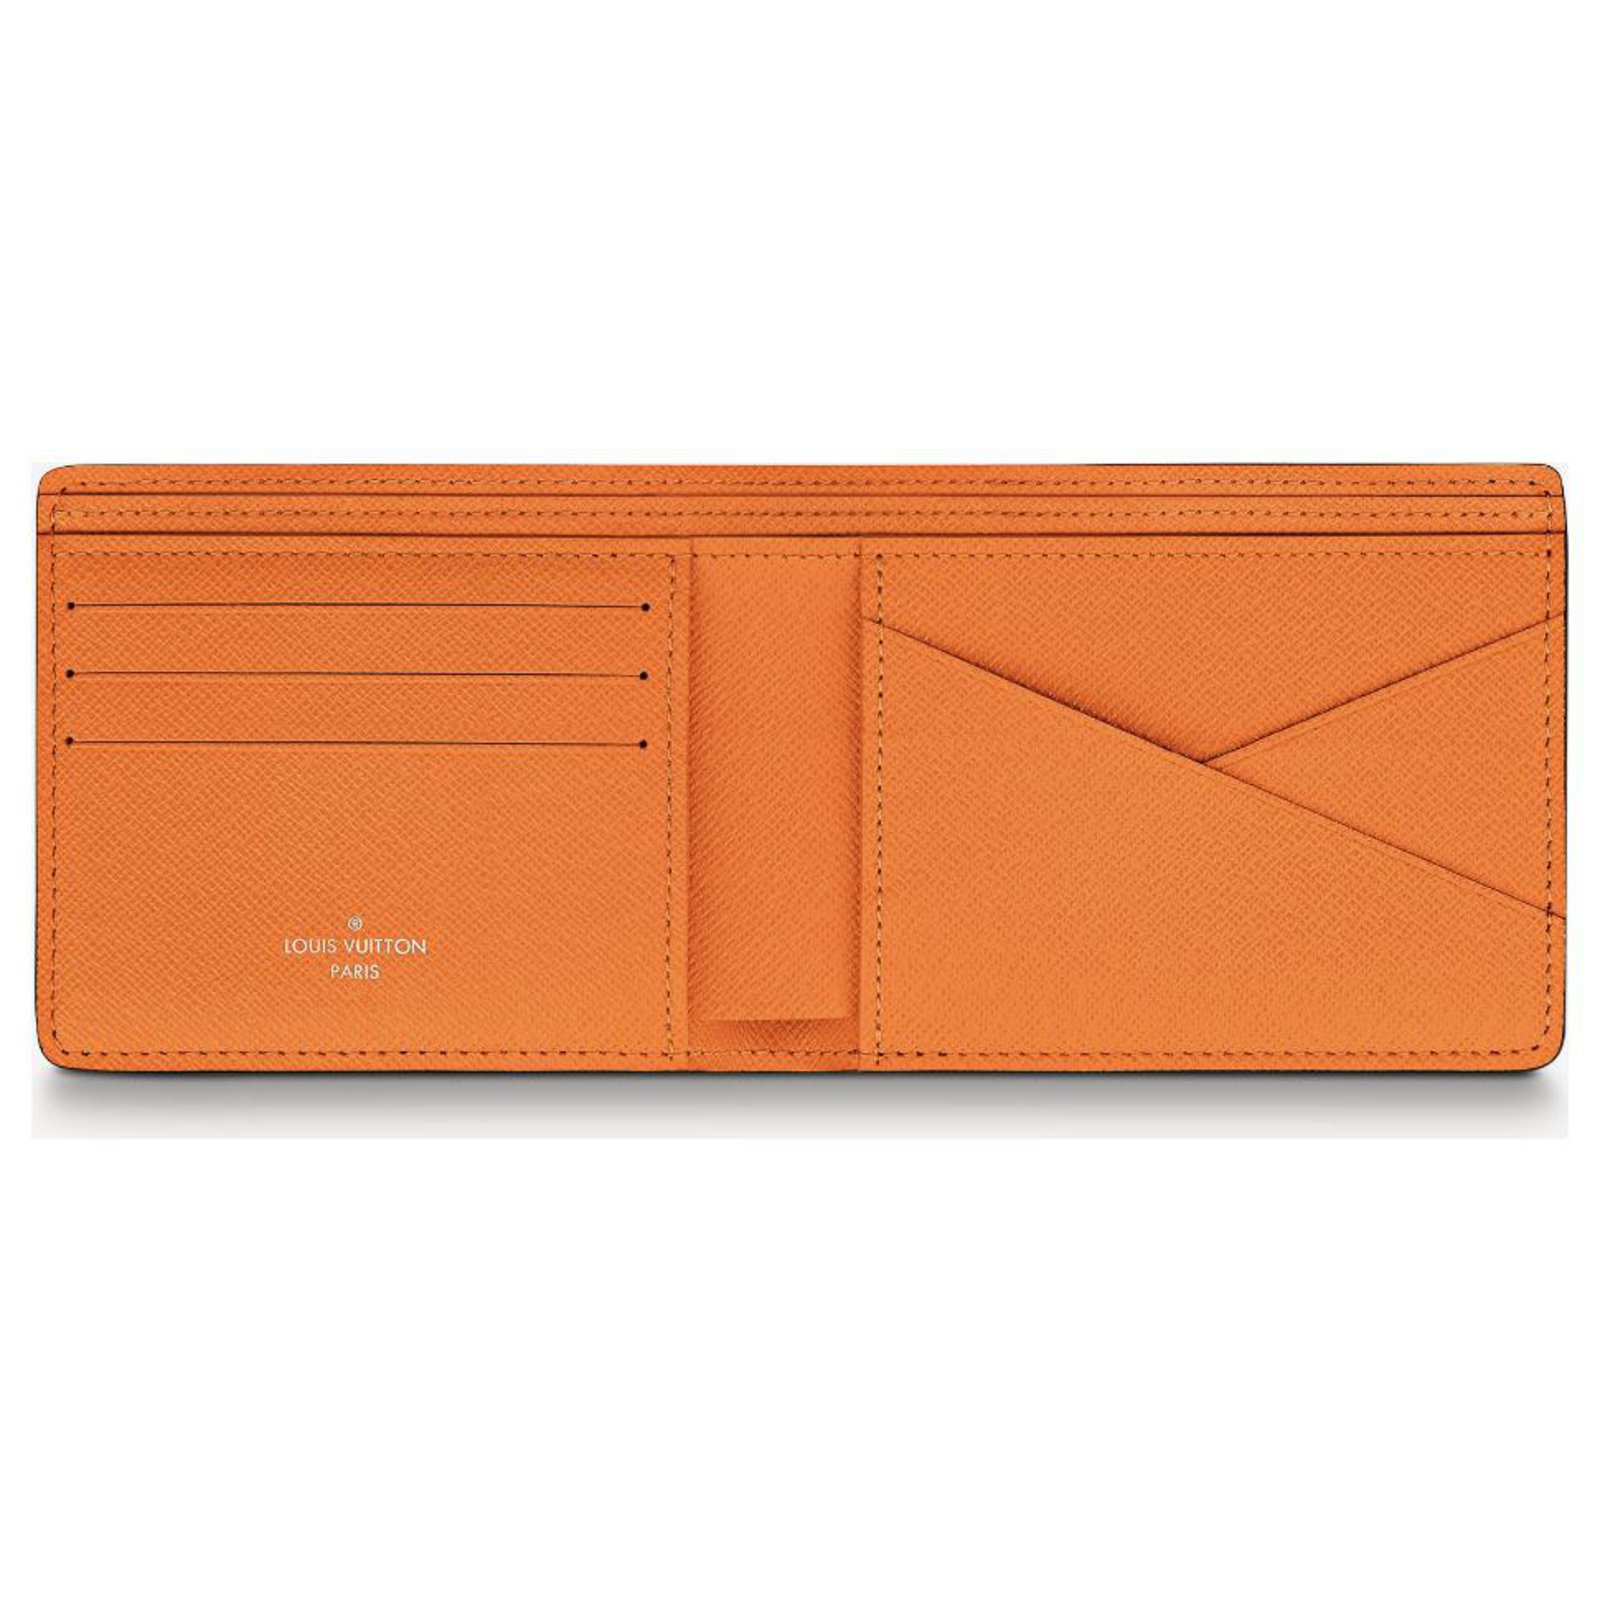 louis vuitton wallet orange inside